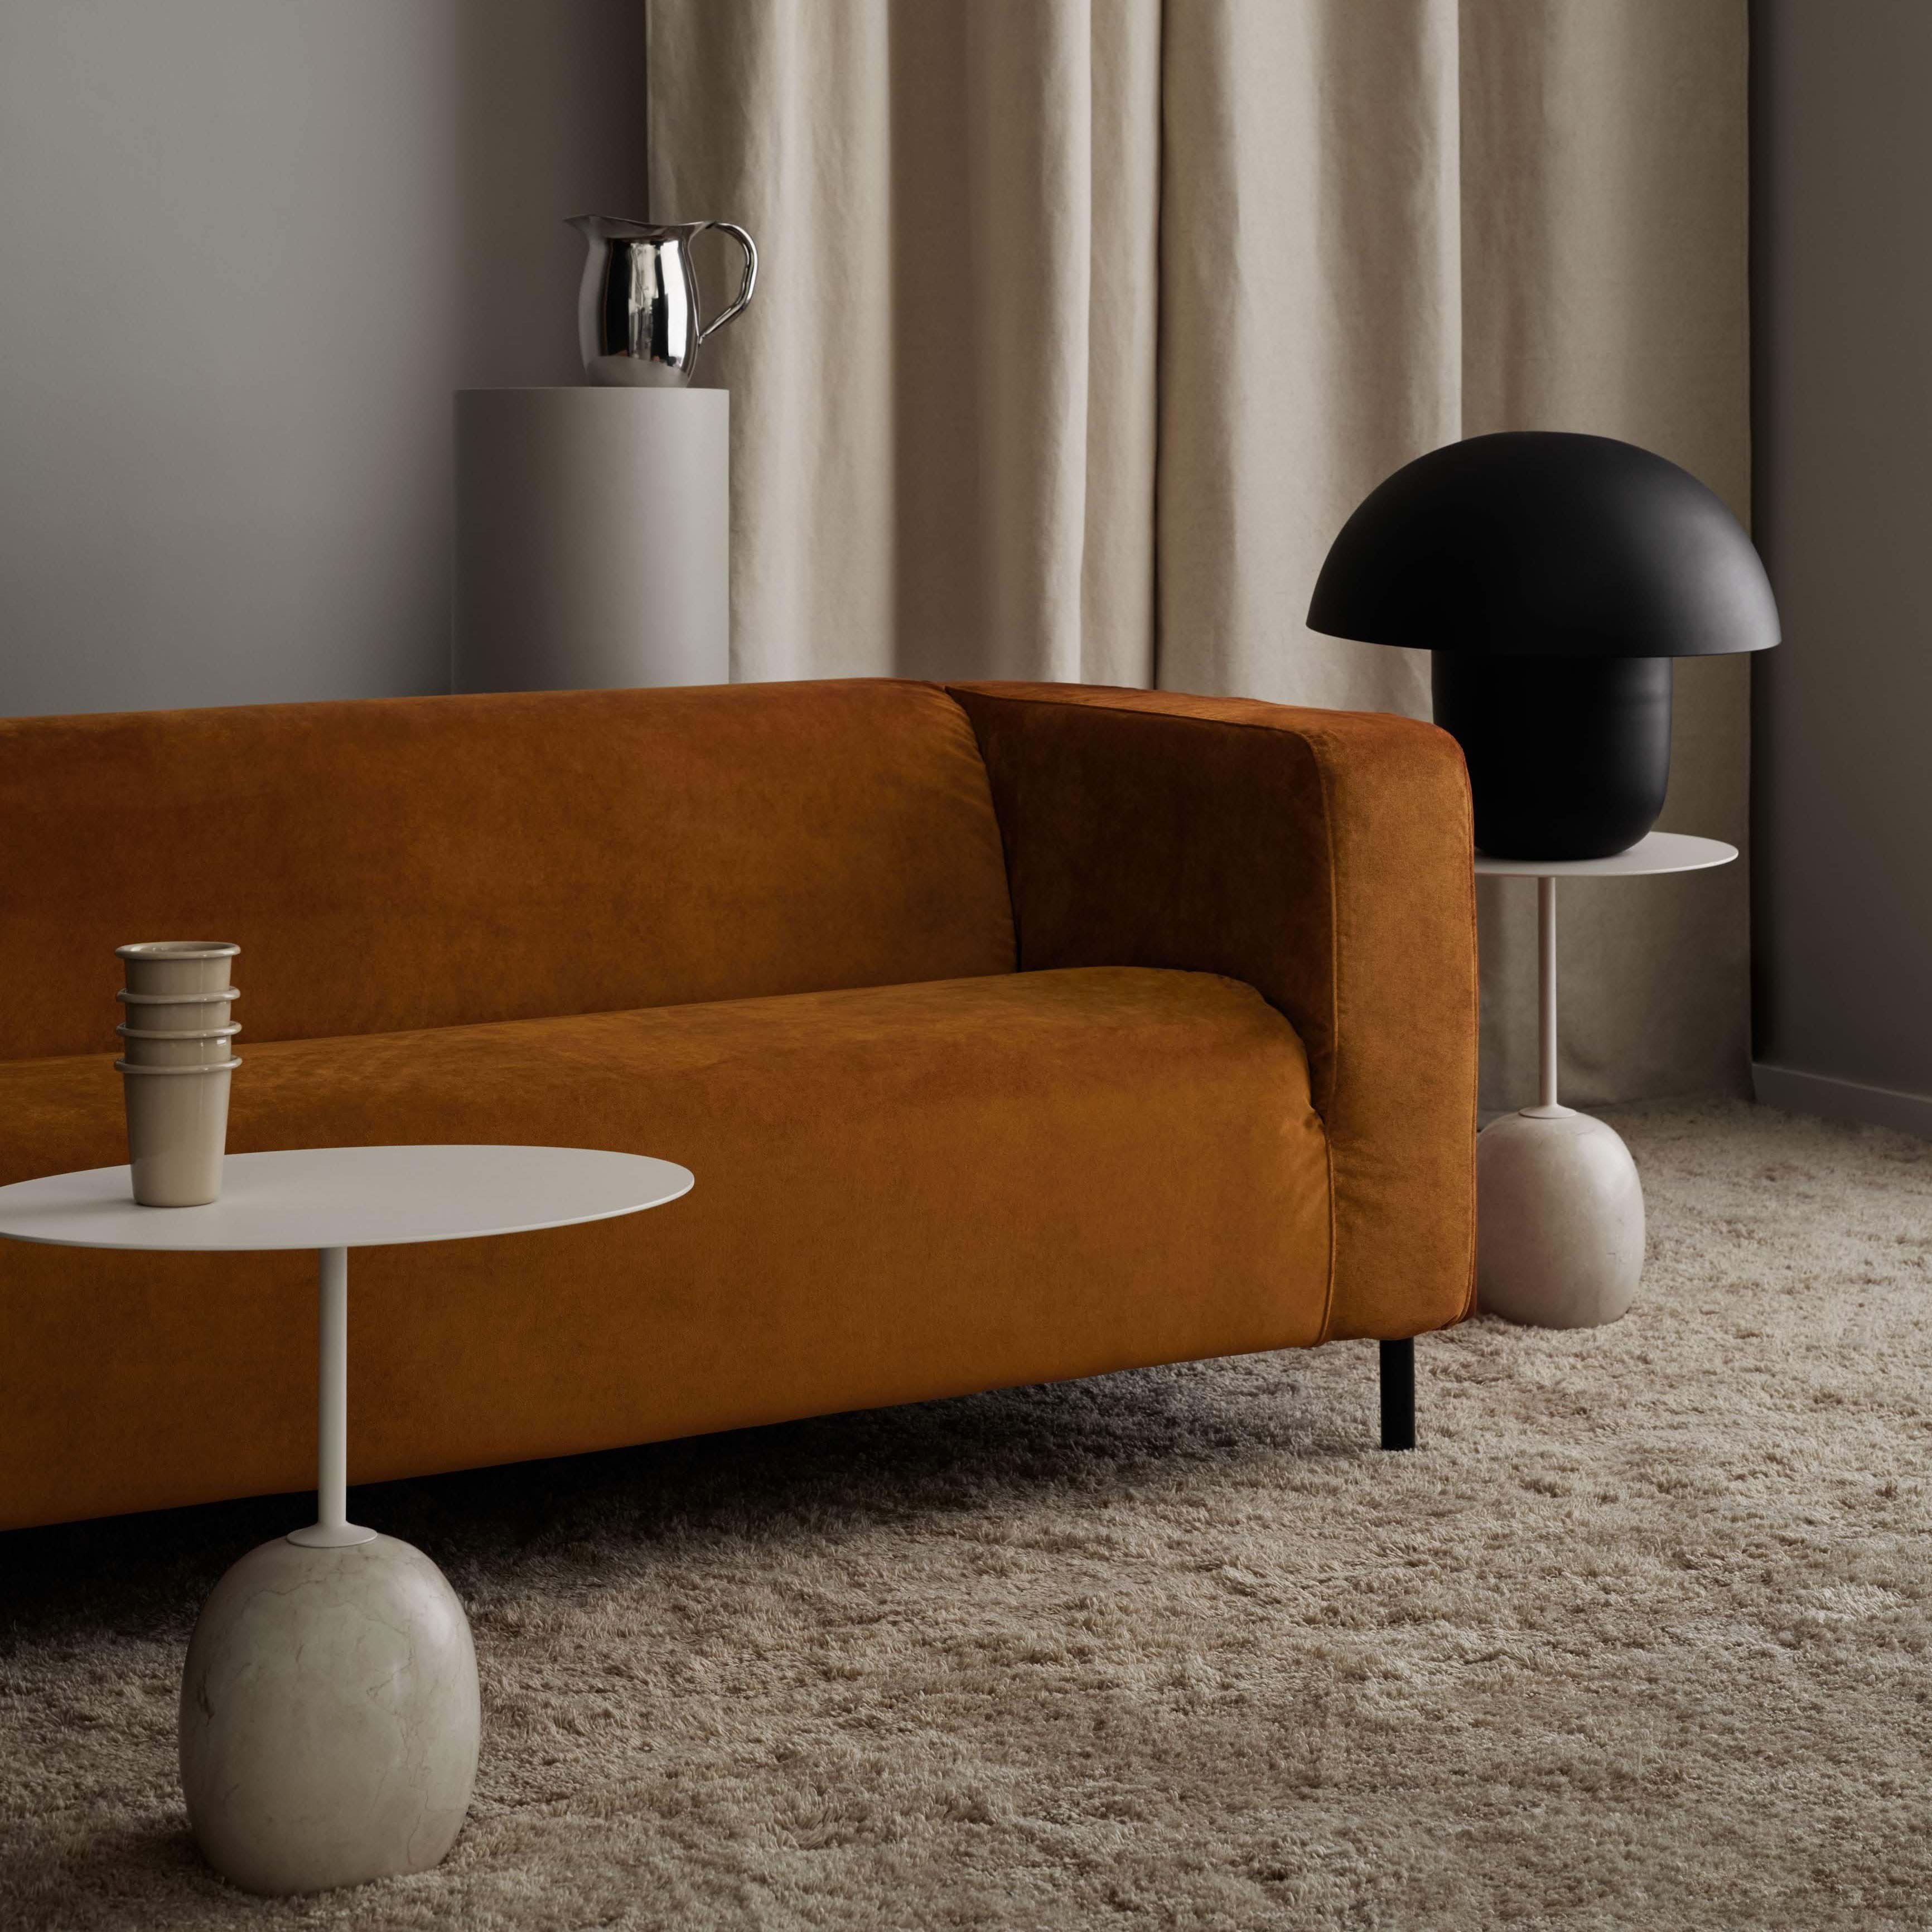 vrede bloemblad Concentratie IKEA Klippan sofa review by Bemz | Bemz